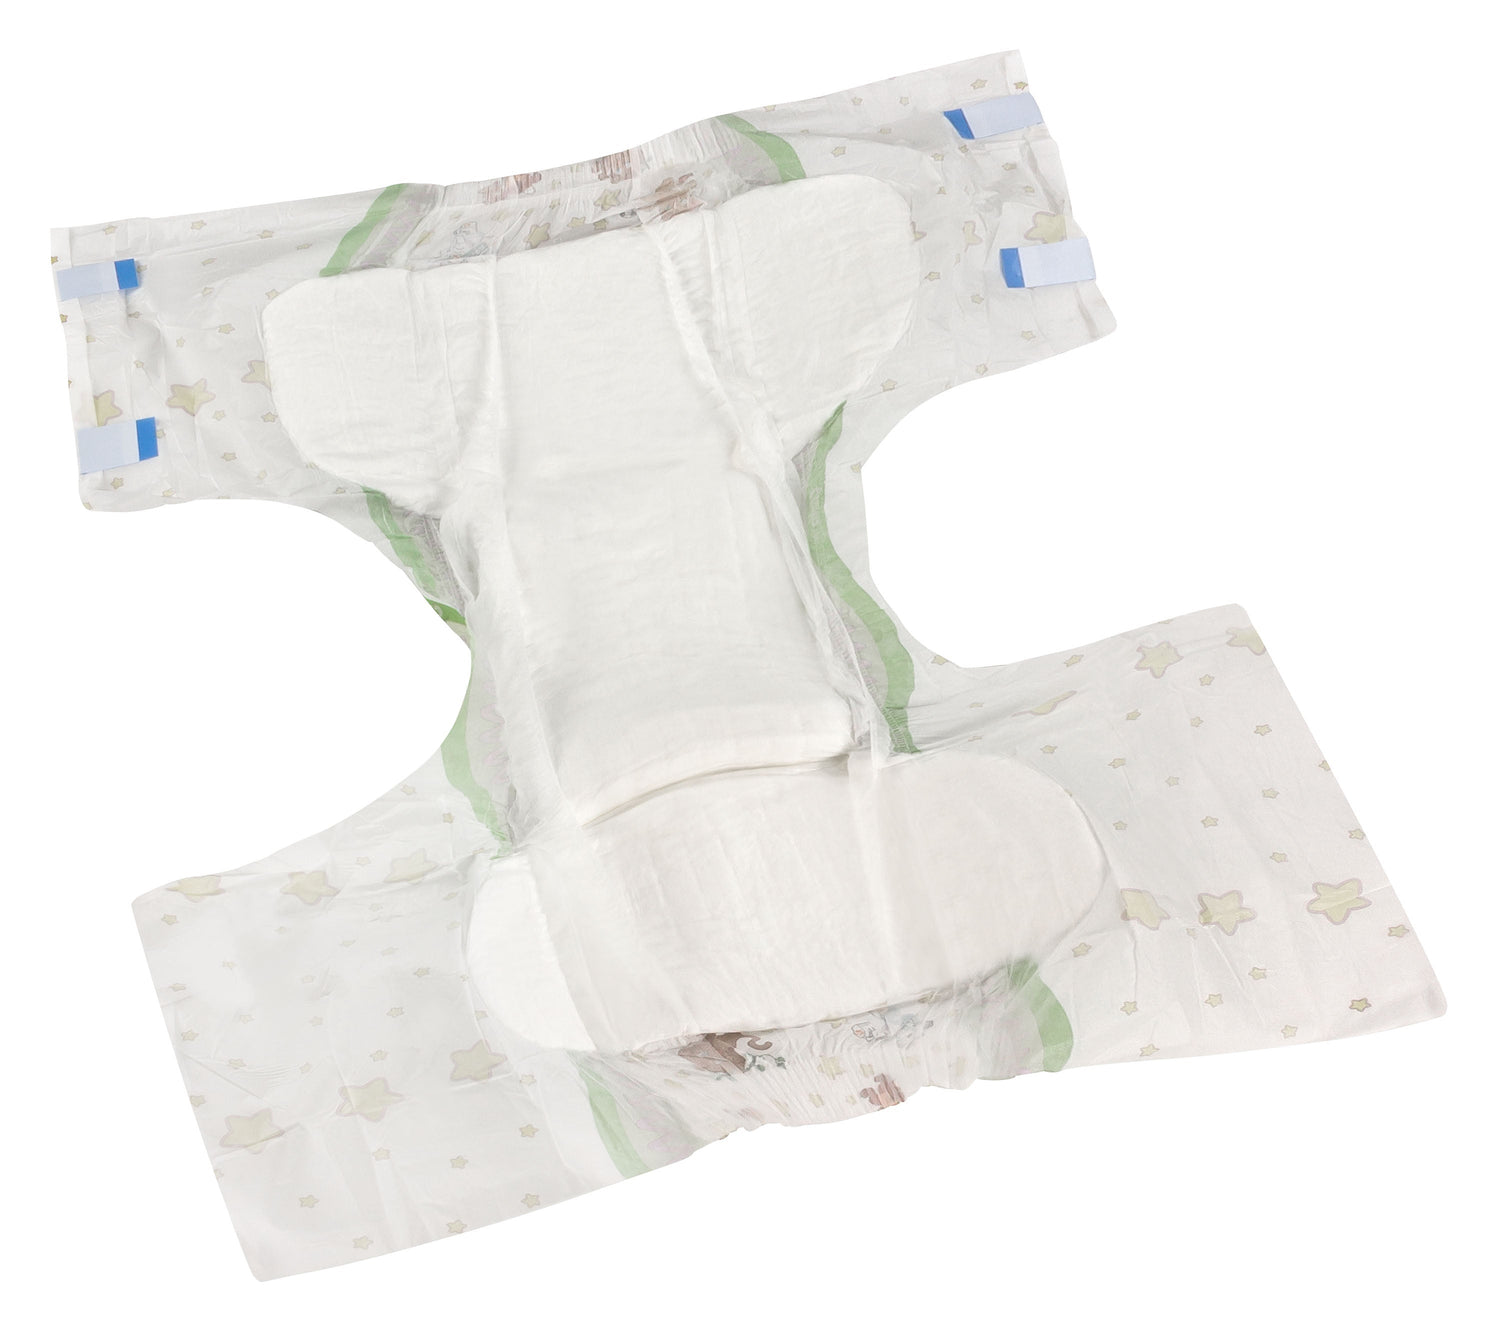 Crinklz Original adult diaper unfolded